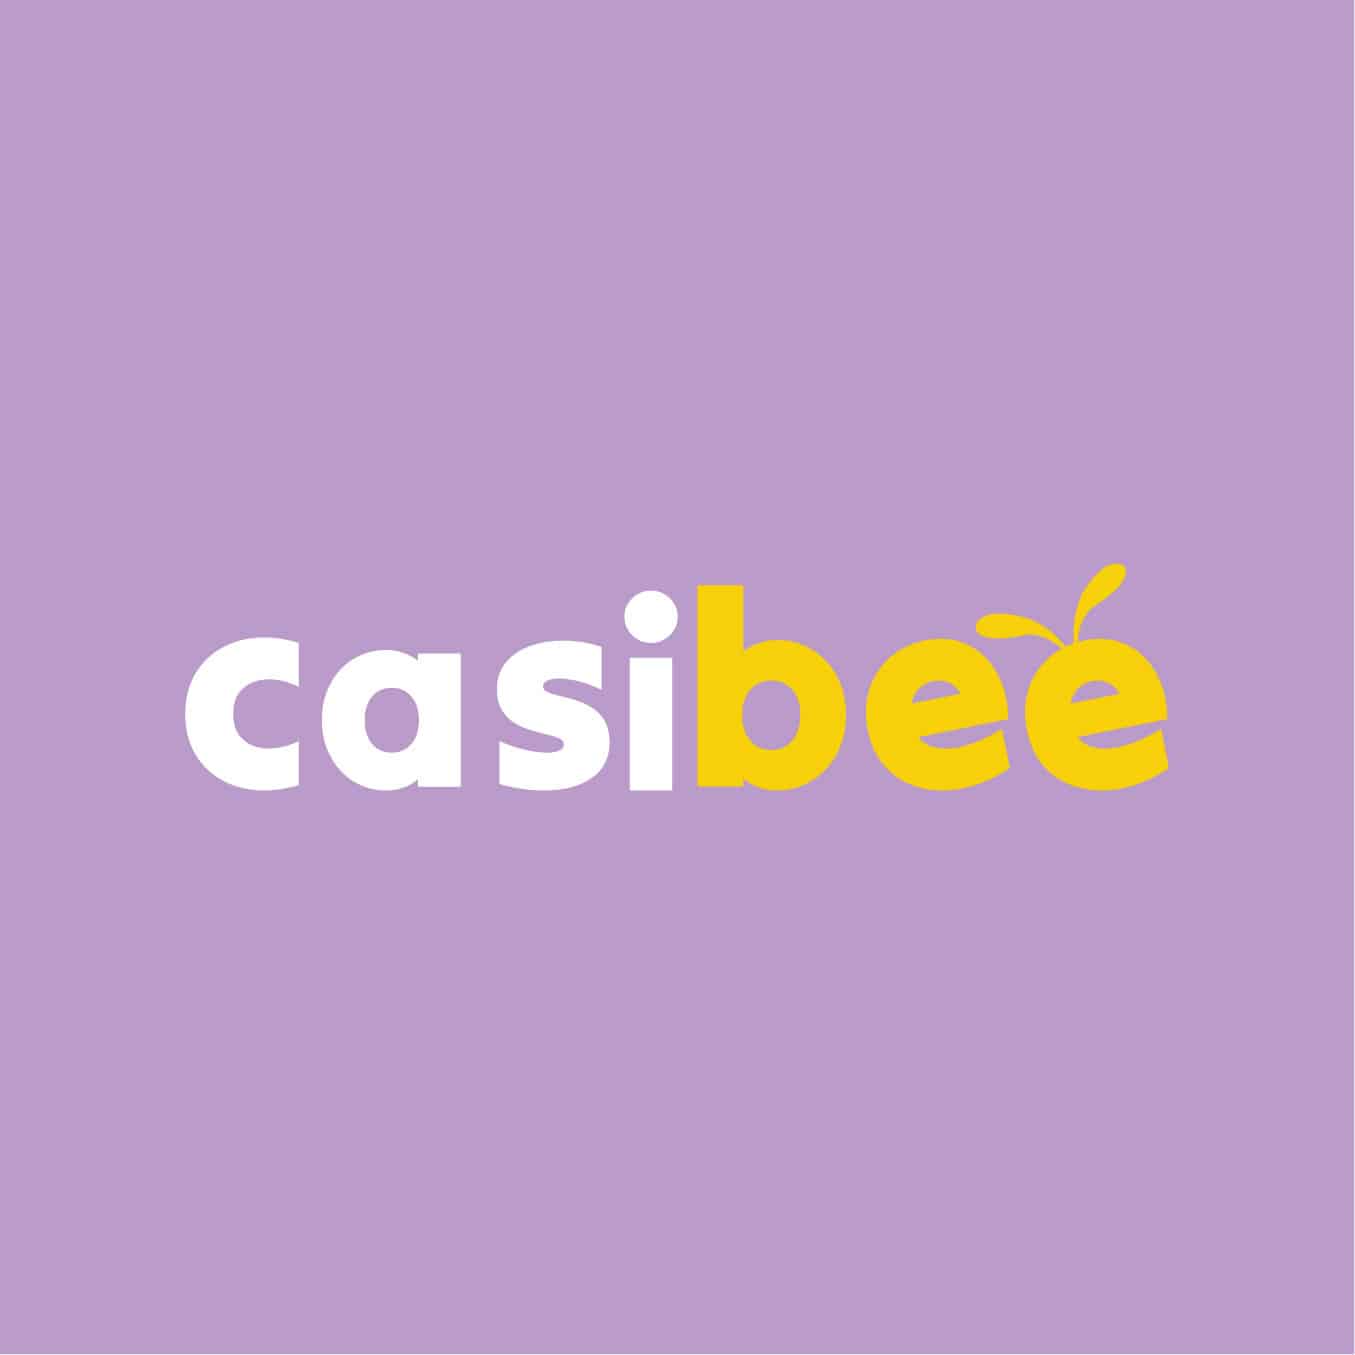 Casibee casino